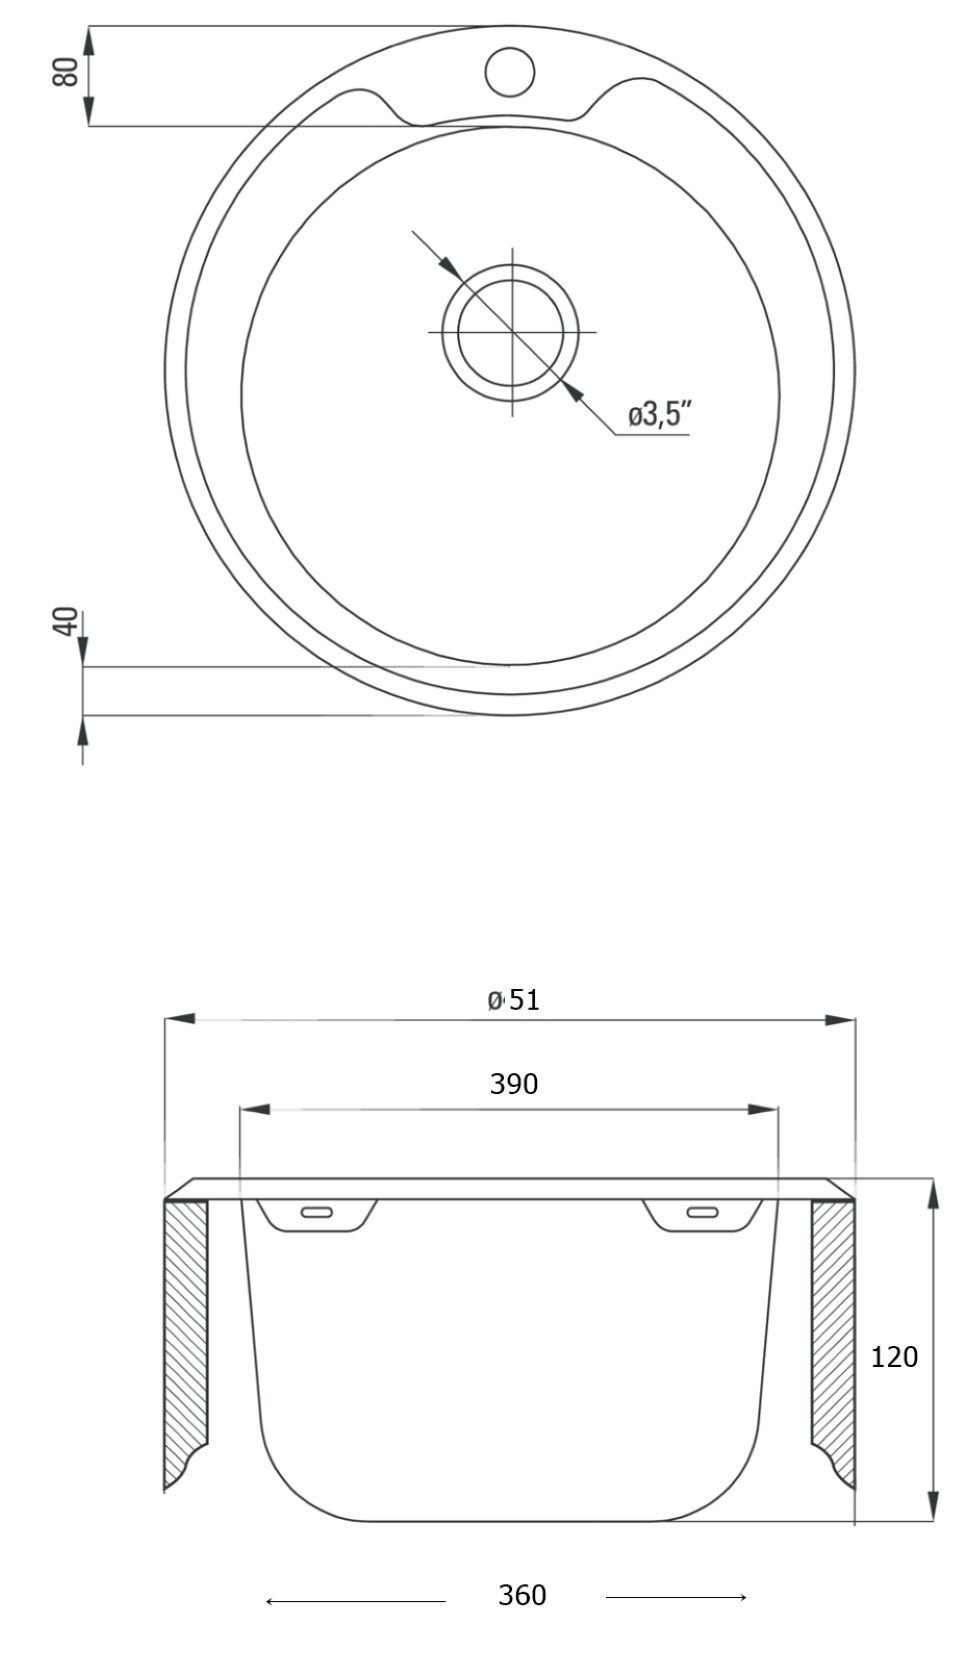 Möbel rund Spüle Edelstahlspüle Zubehör, Einbauspüle mit Edelstahl Spüle rund cm 51 Faizee Küchenspüle